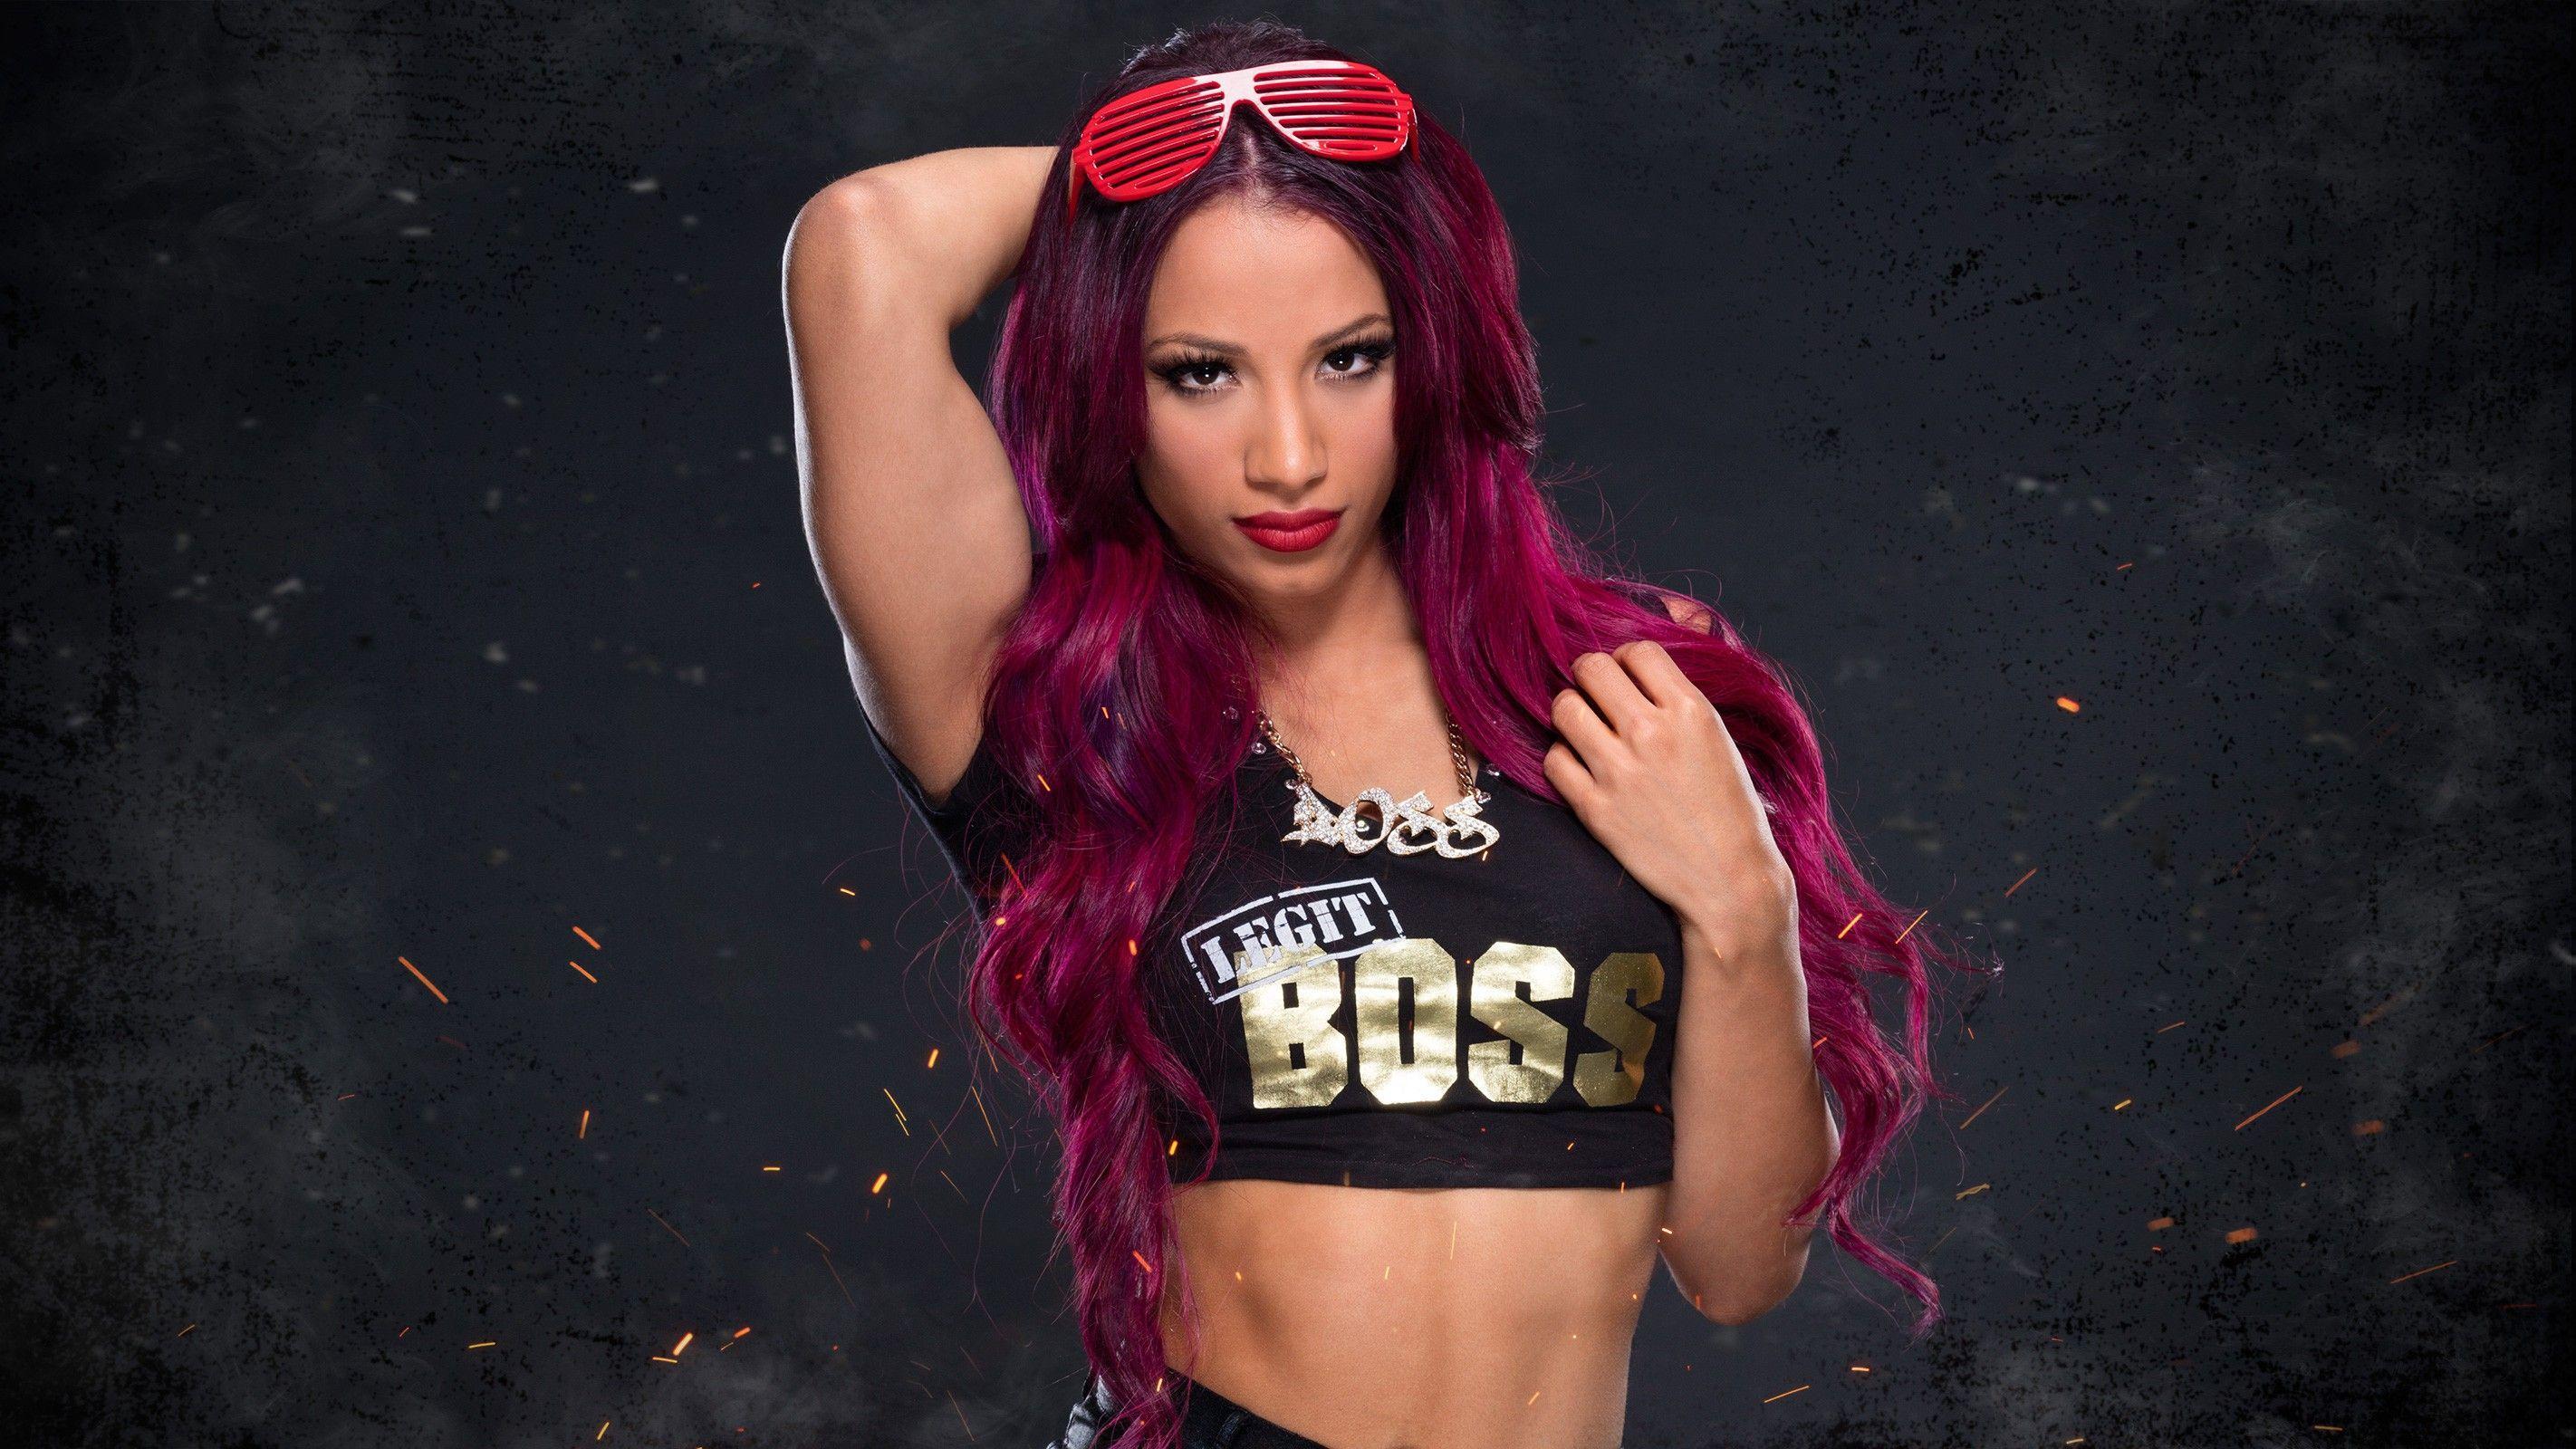 dyed hair, #purple hair, #WWE, #wrestling, #Sasha Banks